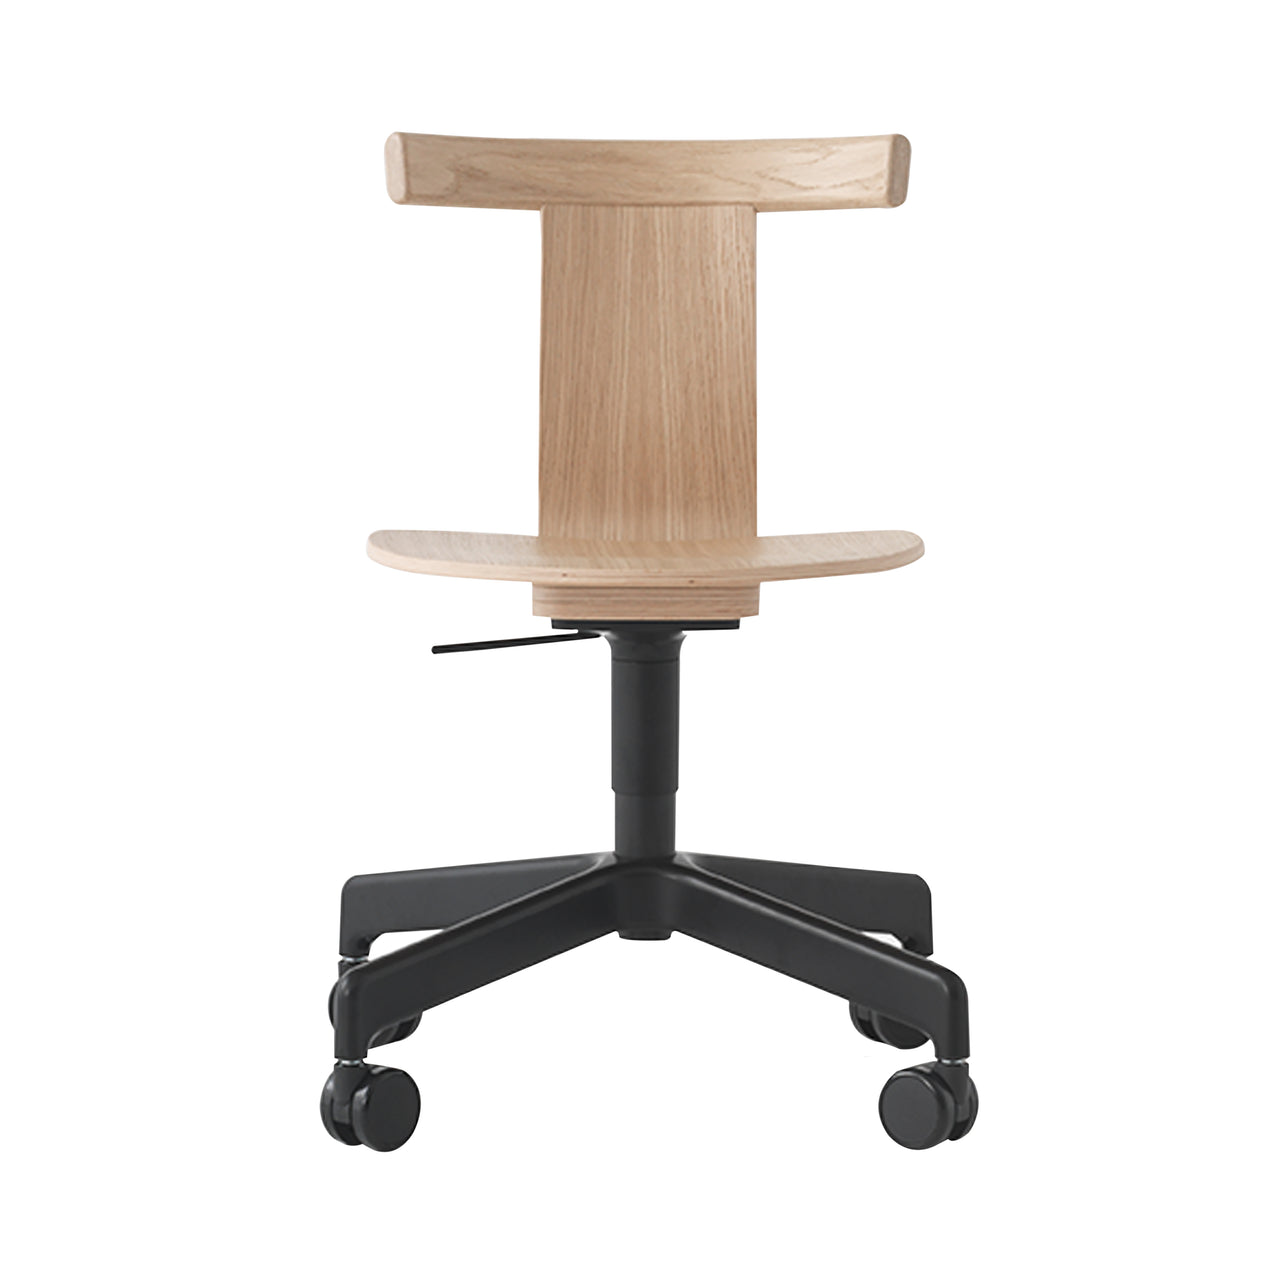 Jiro Swivel Chair: Natural Oak + Black + With Castors